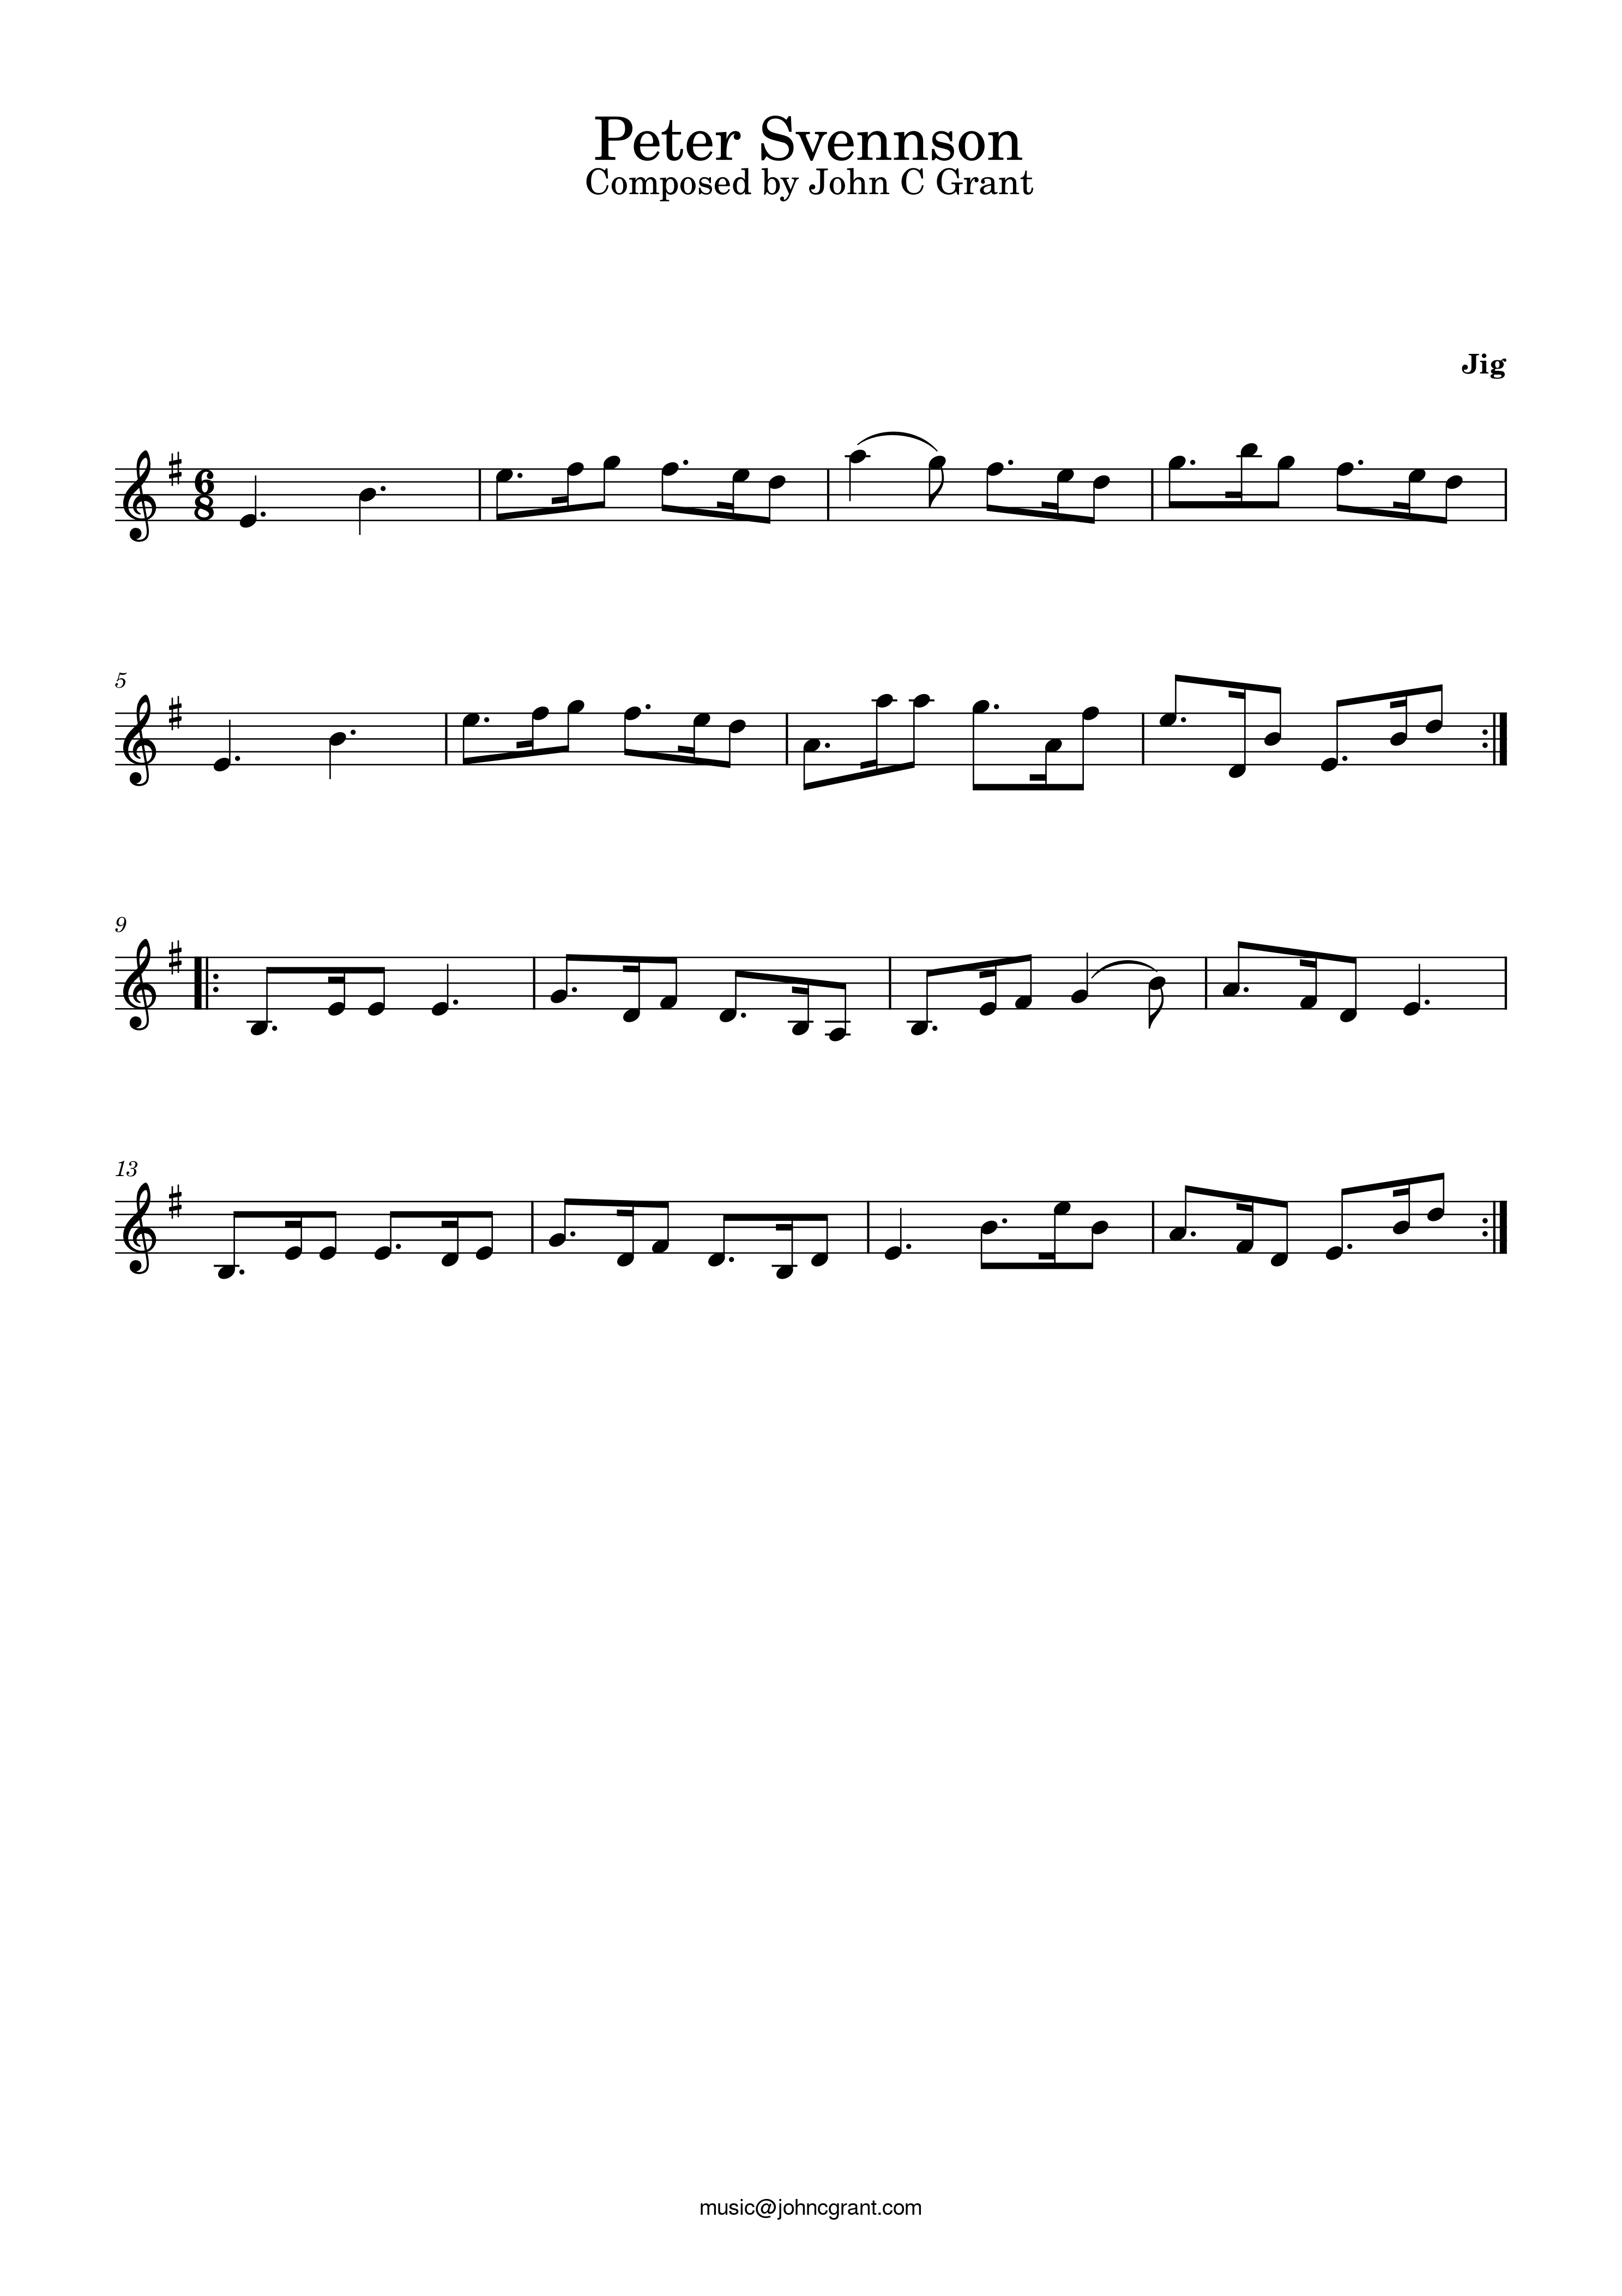 Peter Svennson - Composed by John C Grant (https://johncgrant.com). Traditional composer from Kilmarnock, Ayrshire, Scotland.